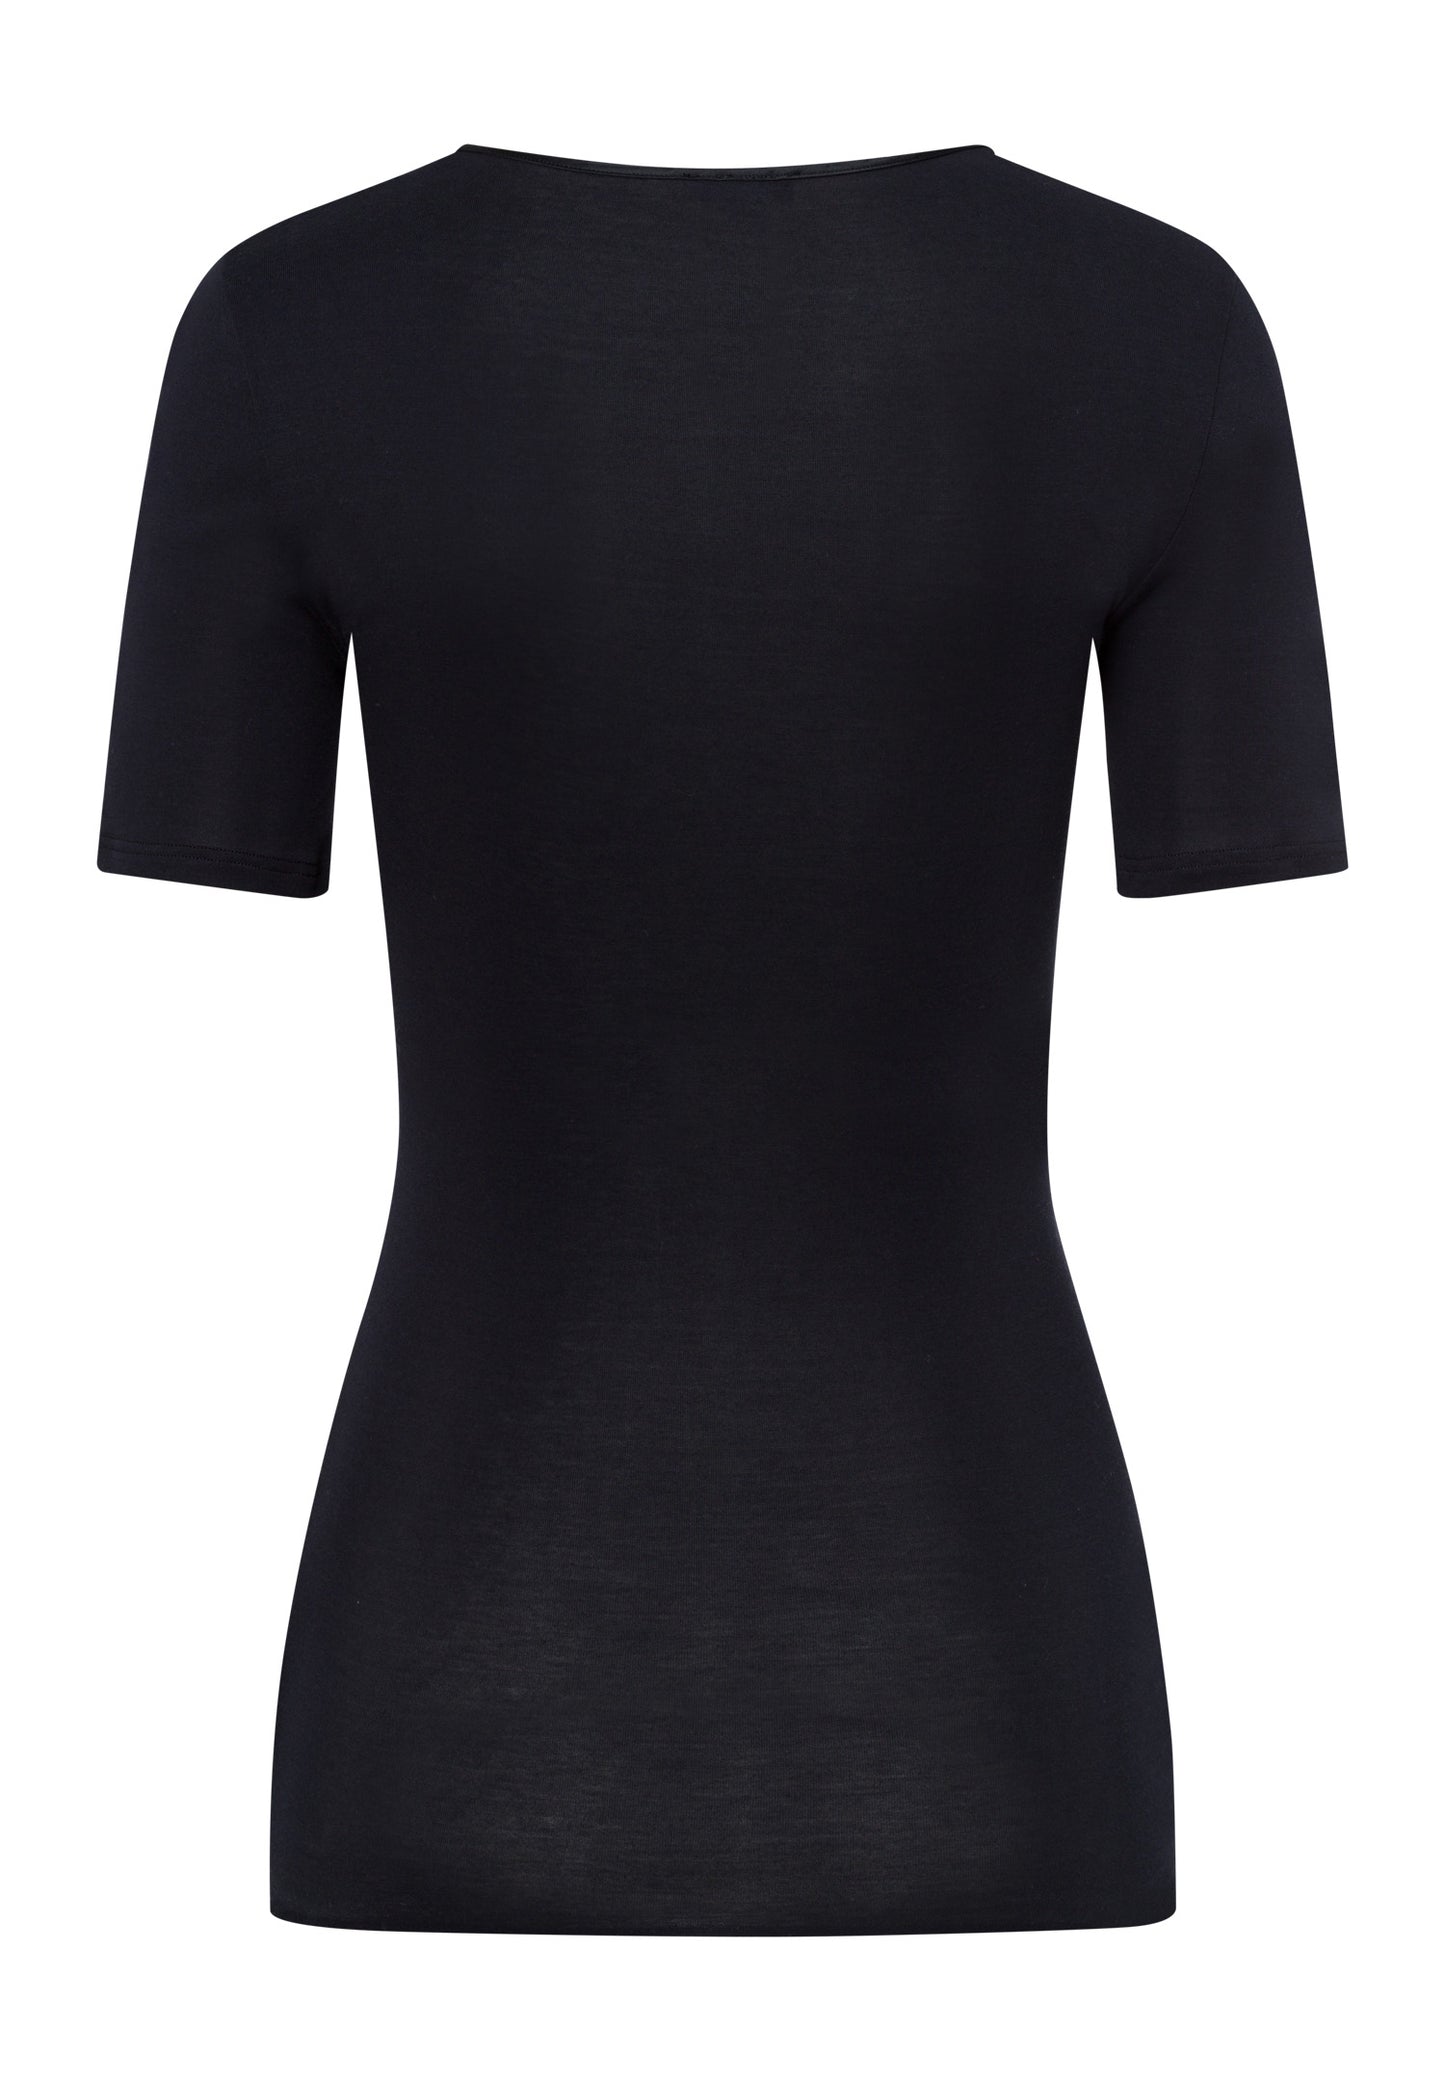 HANRO Black Cotton Seamless Short Sleeve Shirt